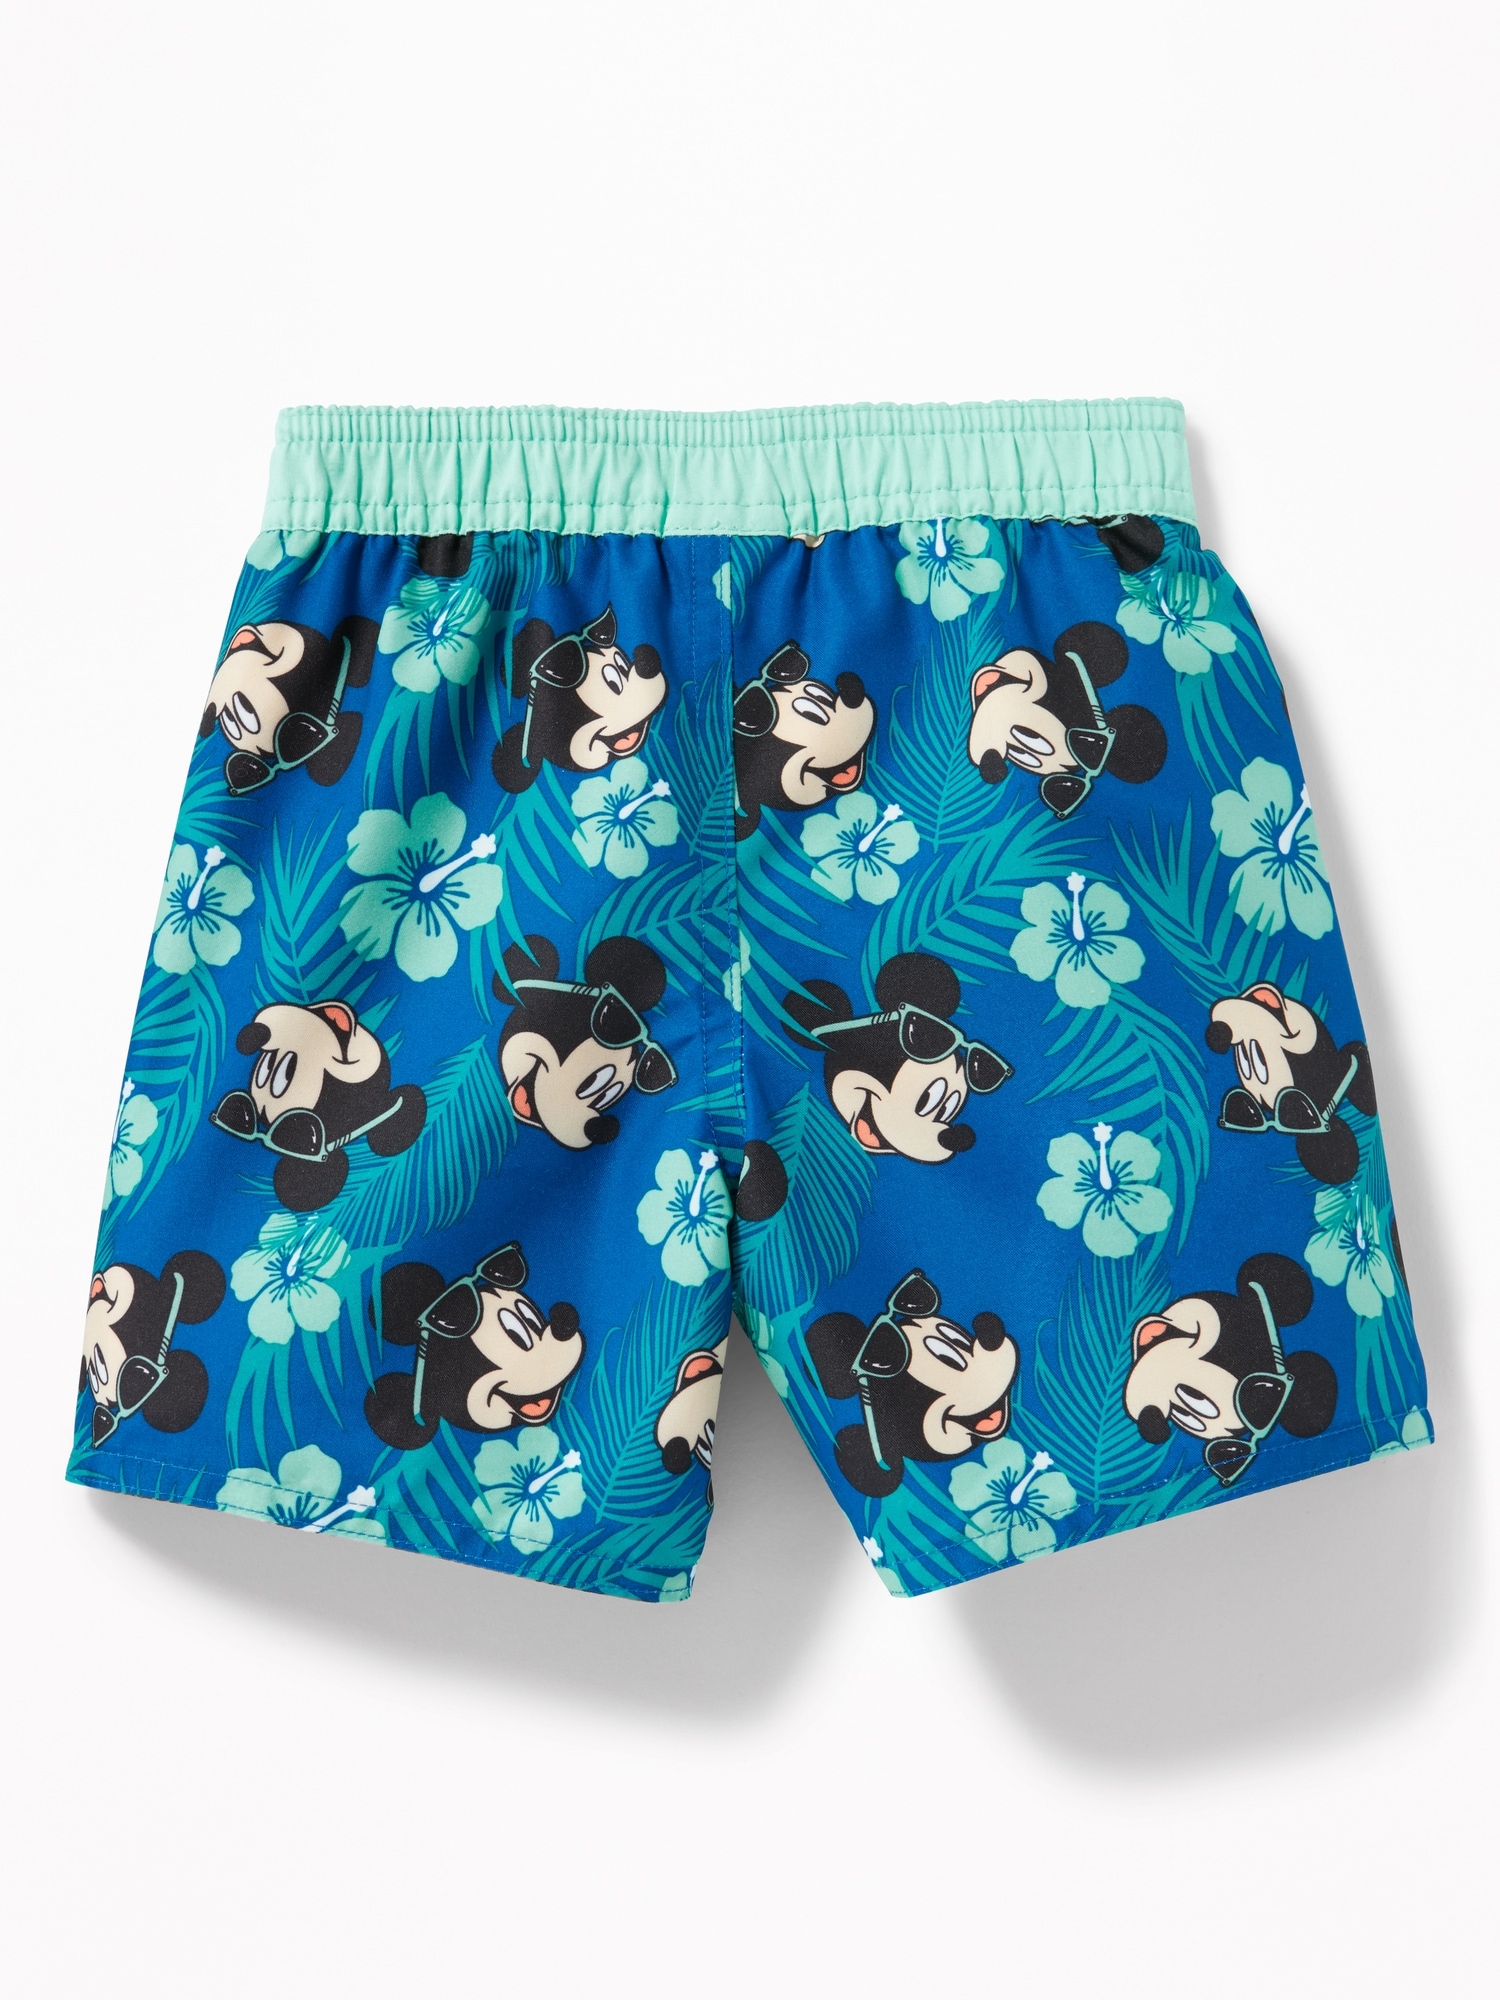 Disney© Mickey Mouse Swim Trunks for Toddler Boys | Old Navy